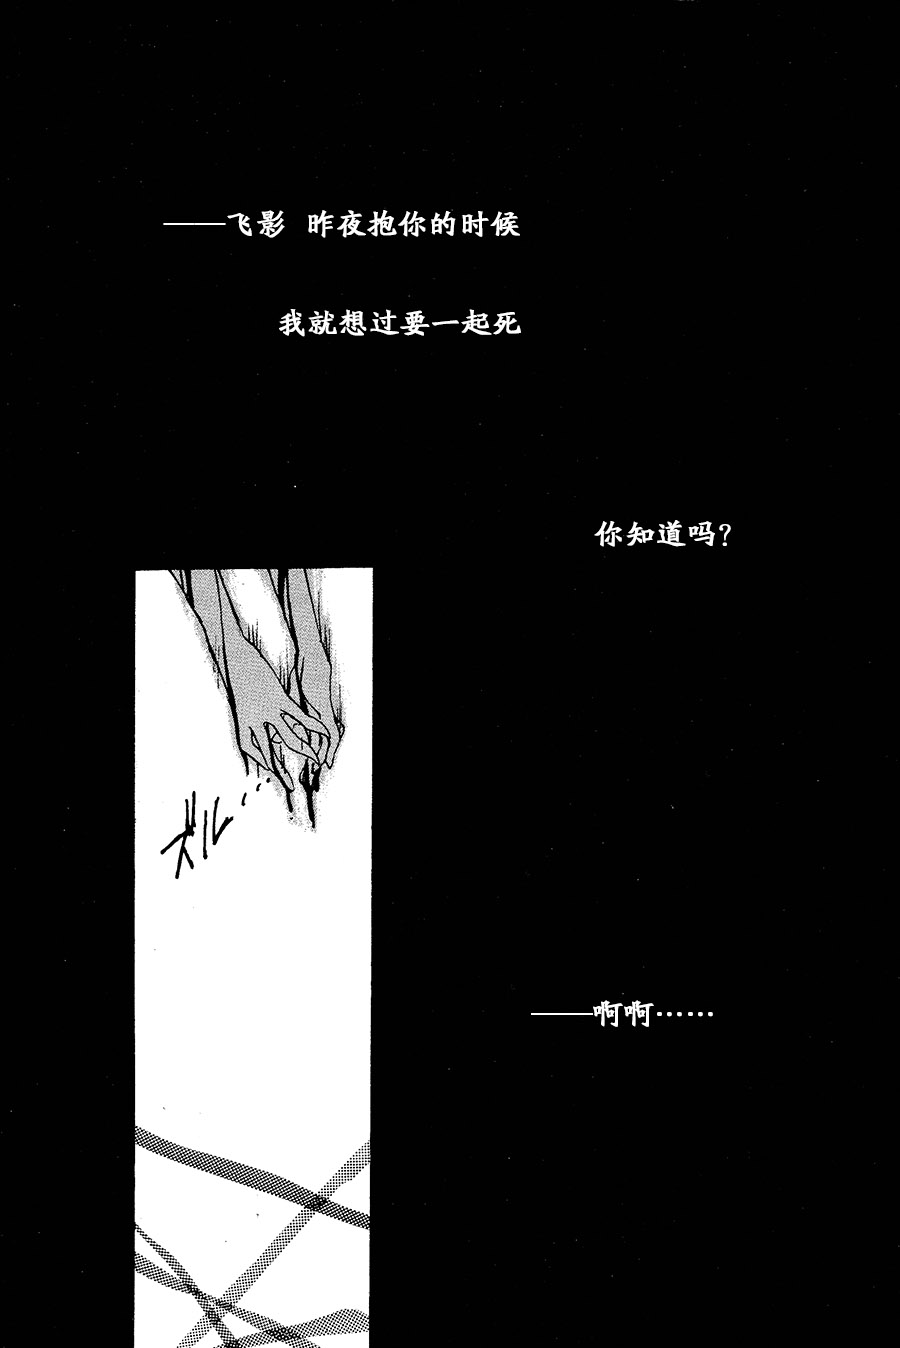 【漫画】 SAINT STUDIO/有史南&根村田さい《给冰之鱼》 - 页 2 Img30786